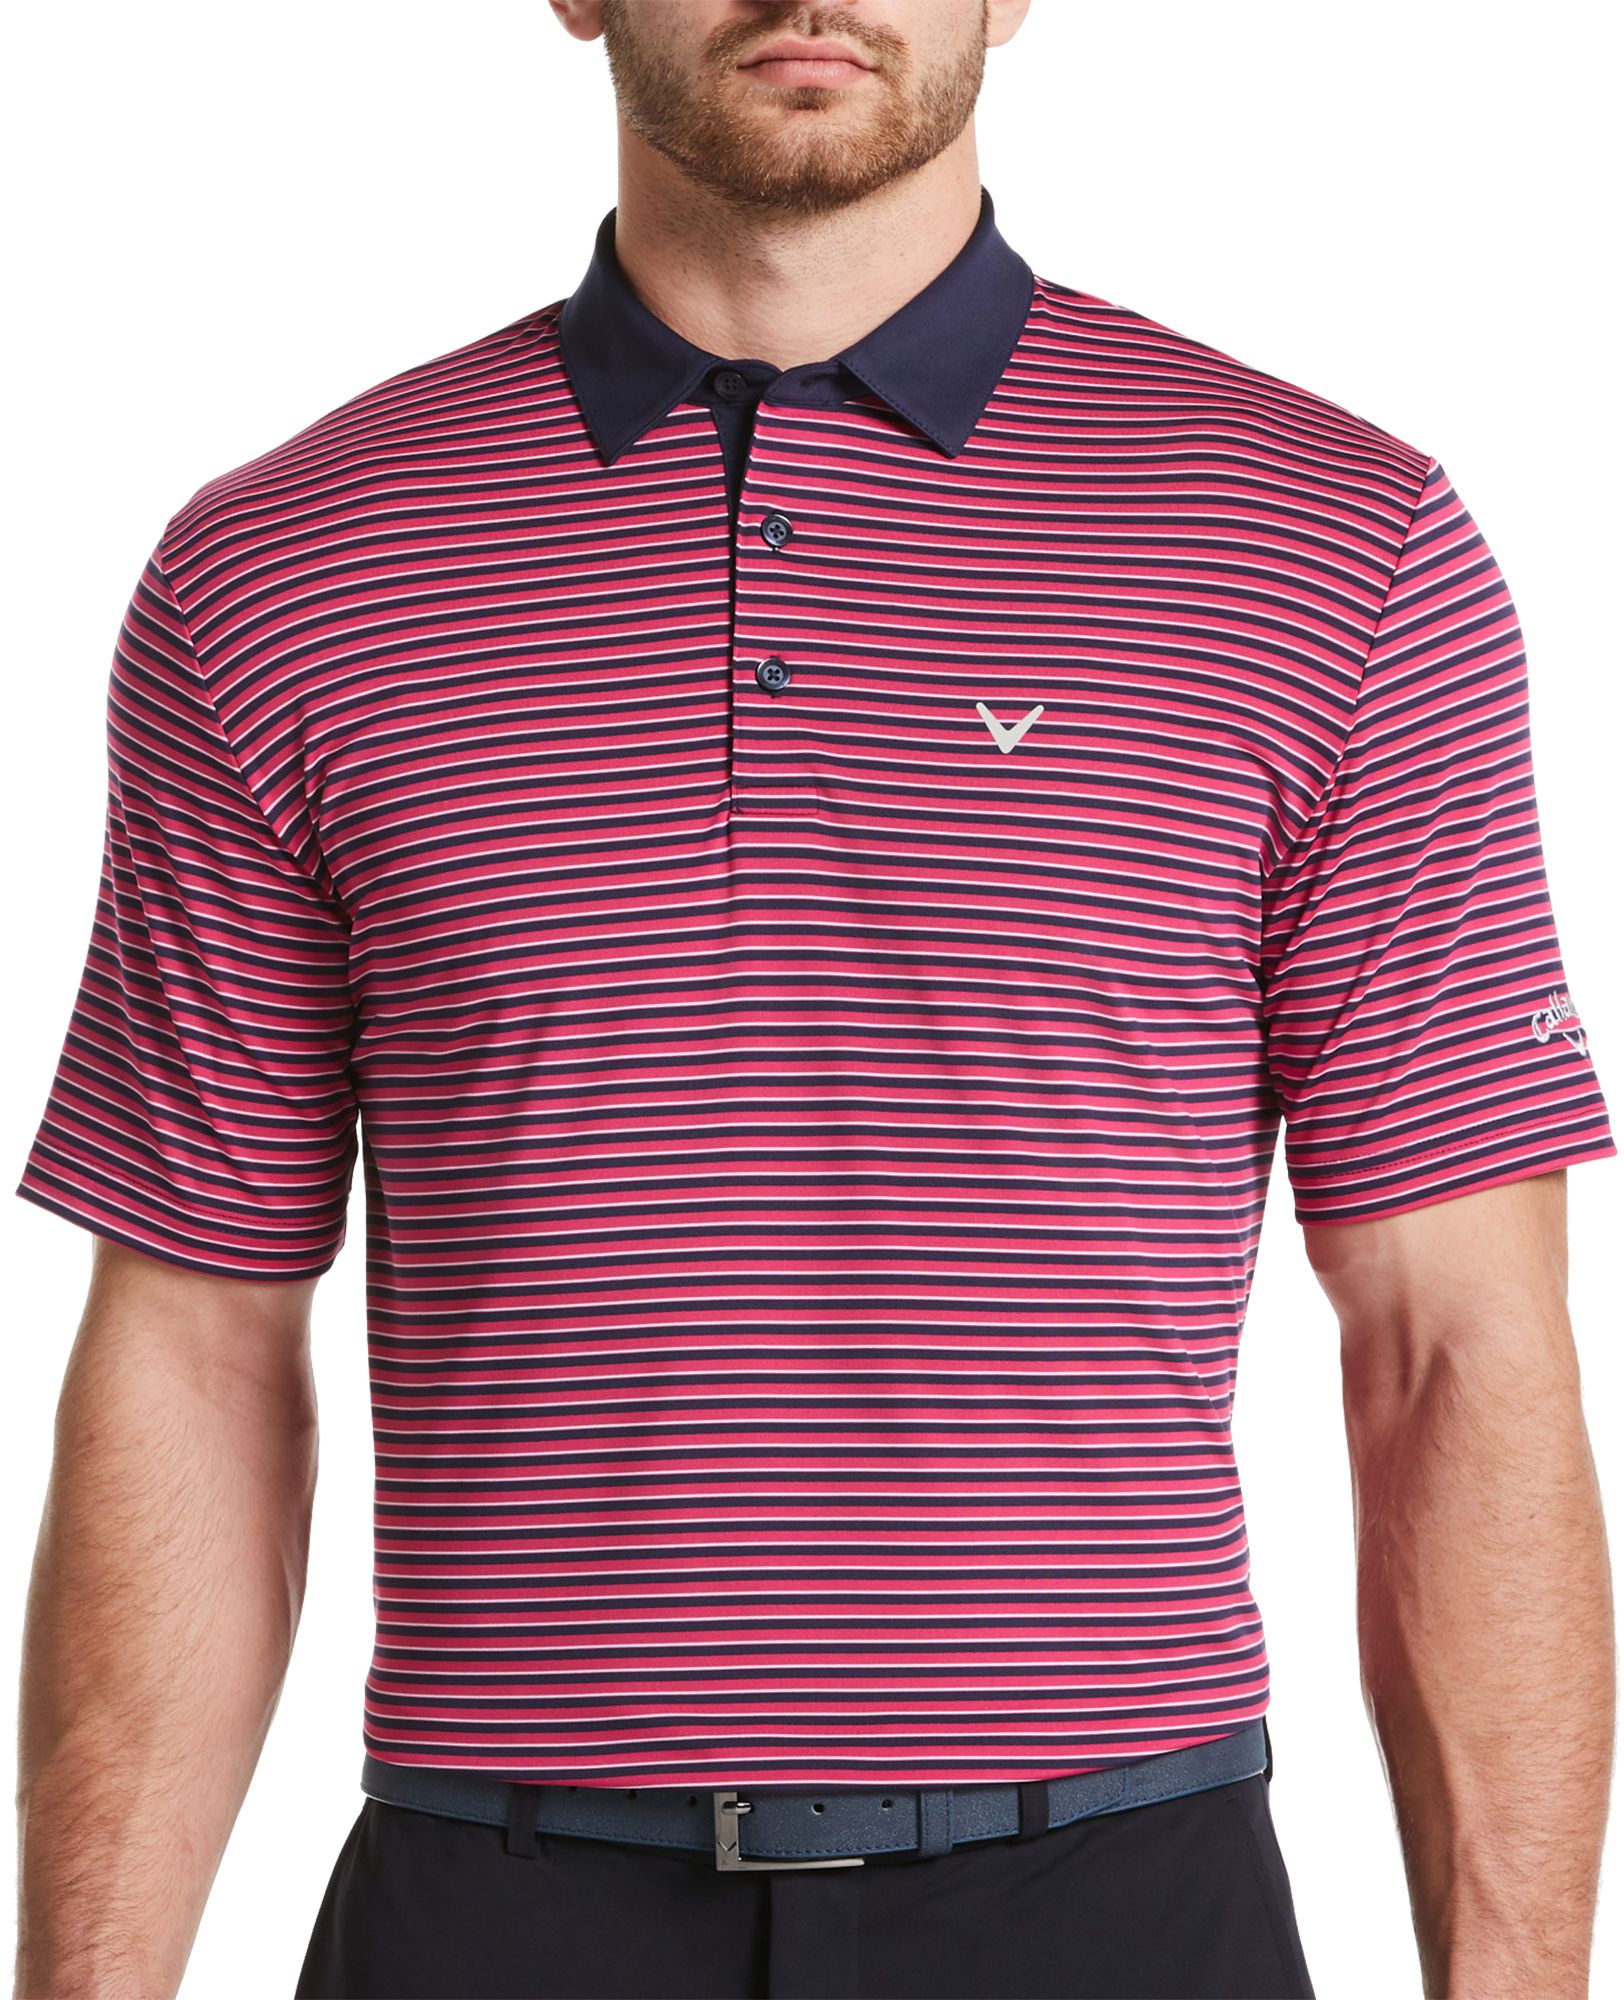 adidas men's drive 2 color stripe golf polo